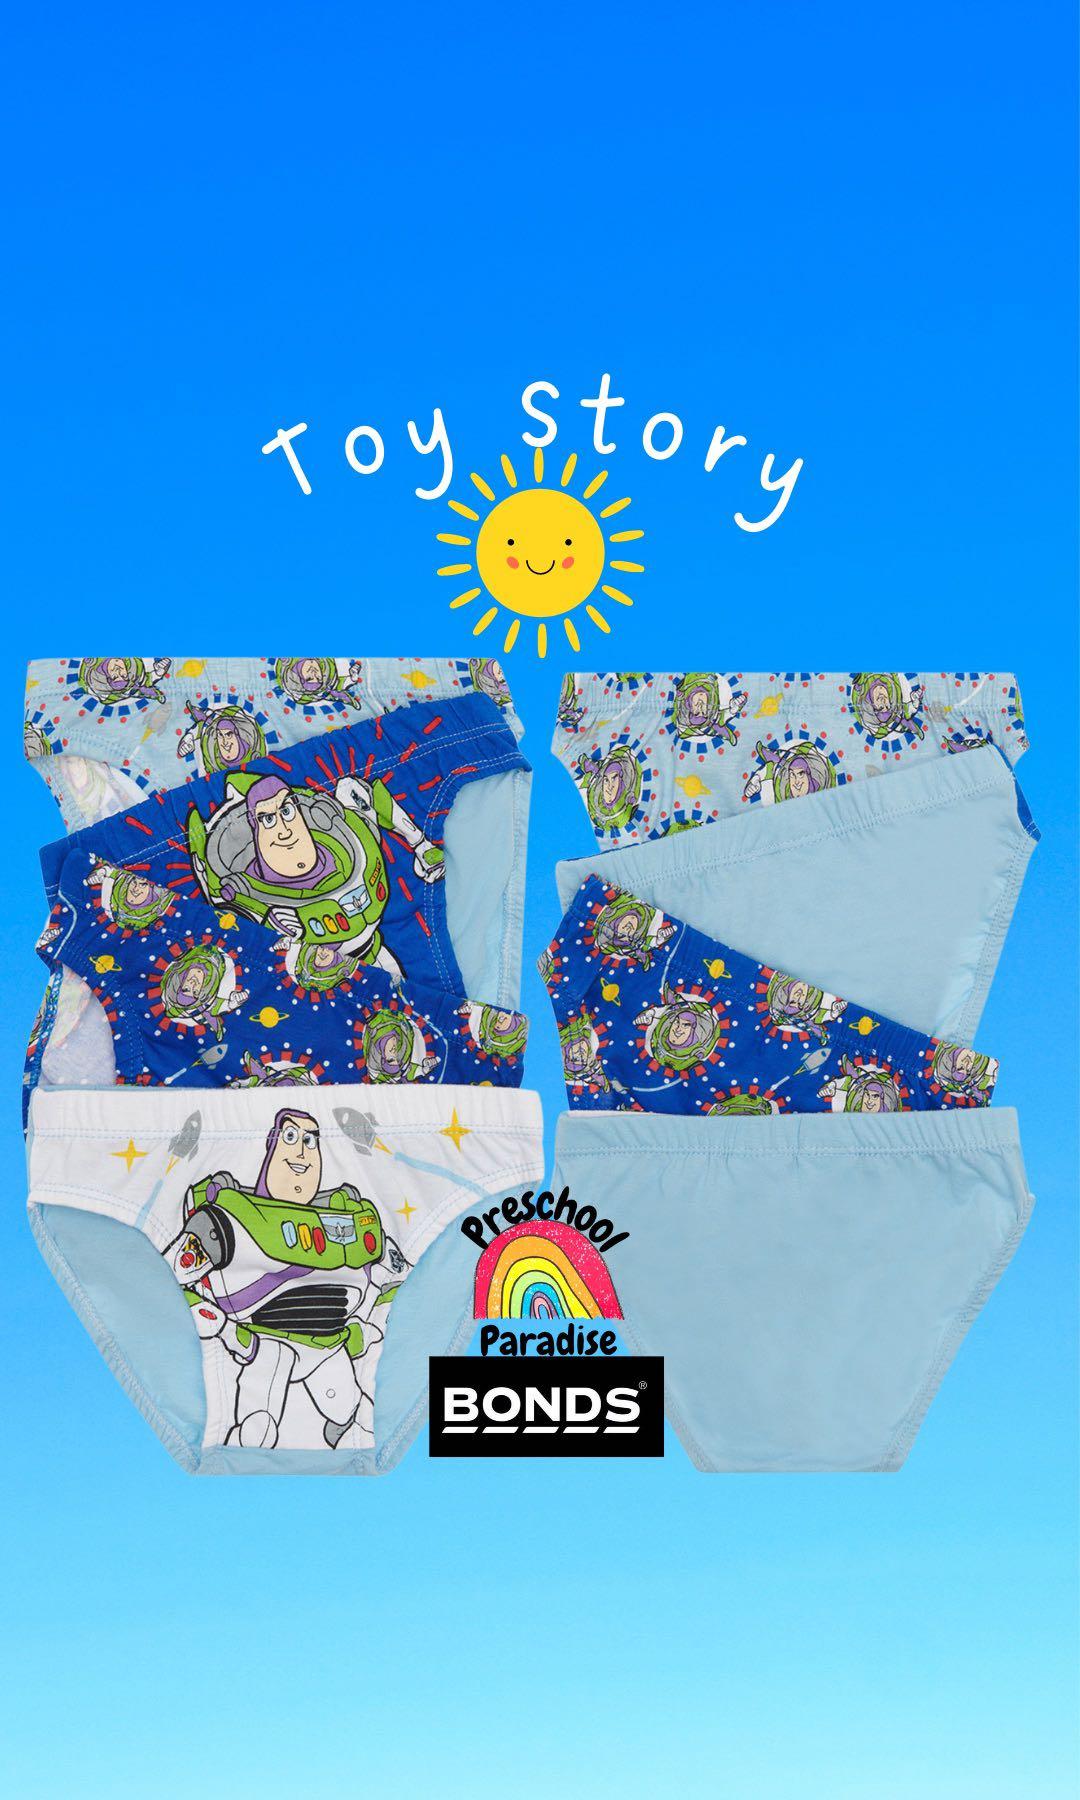 Bonds (Australia) Toy Story boys underwear (4 briefs per pack) - soft  cotton, toilet training, buzz lightyear ready stock, Babies & Kids, Babies  & Kids Fashion on Carousell